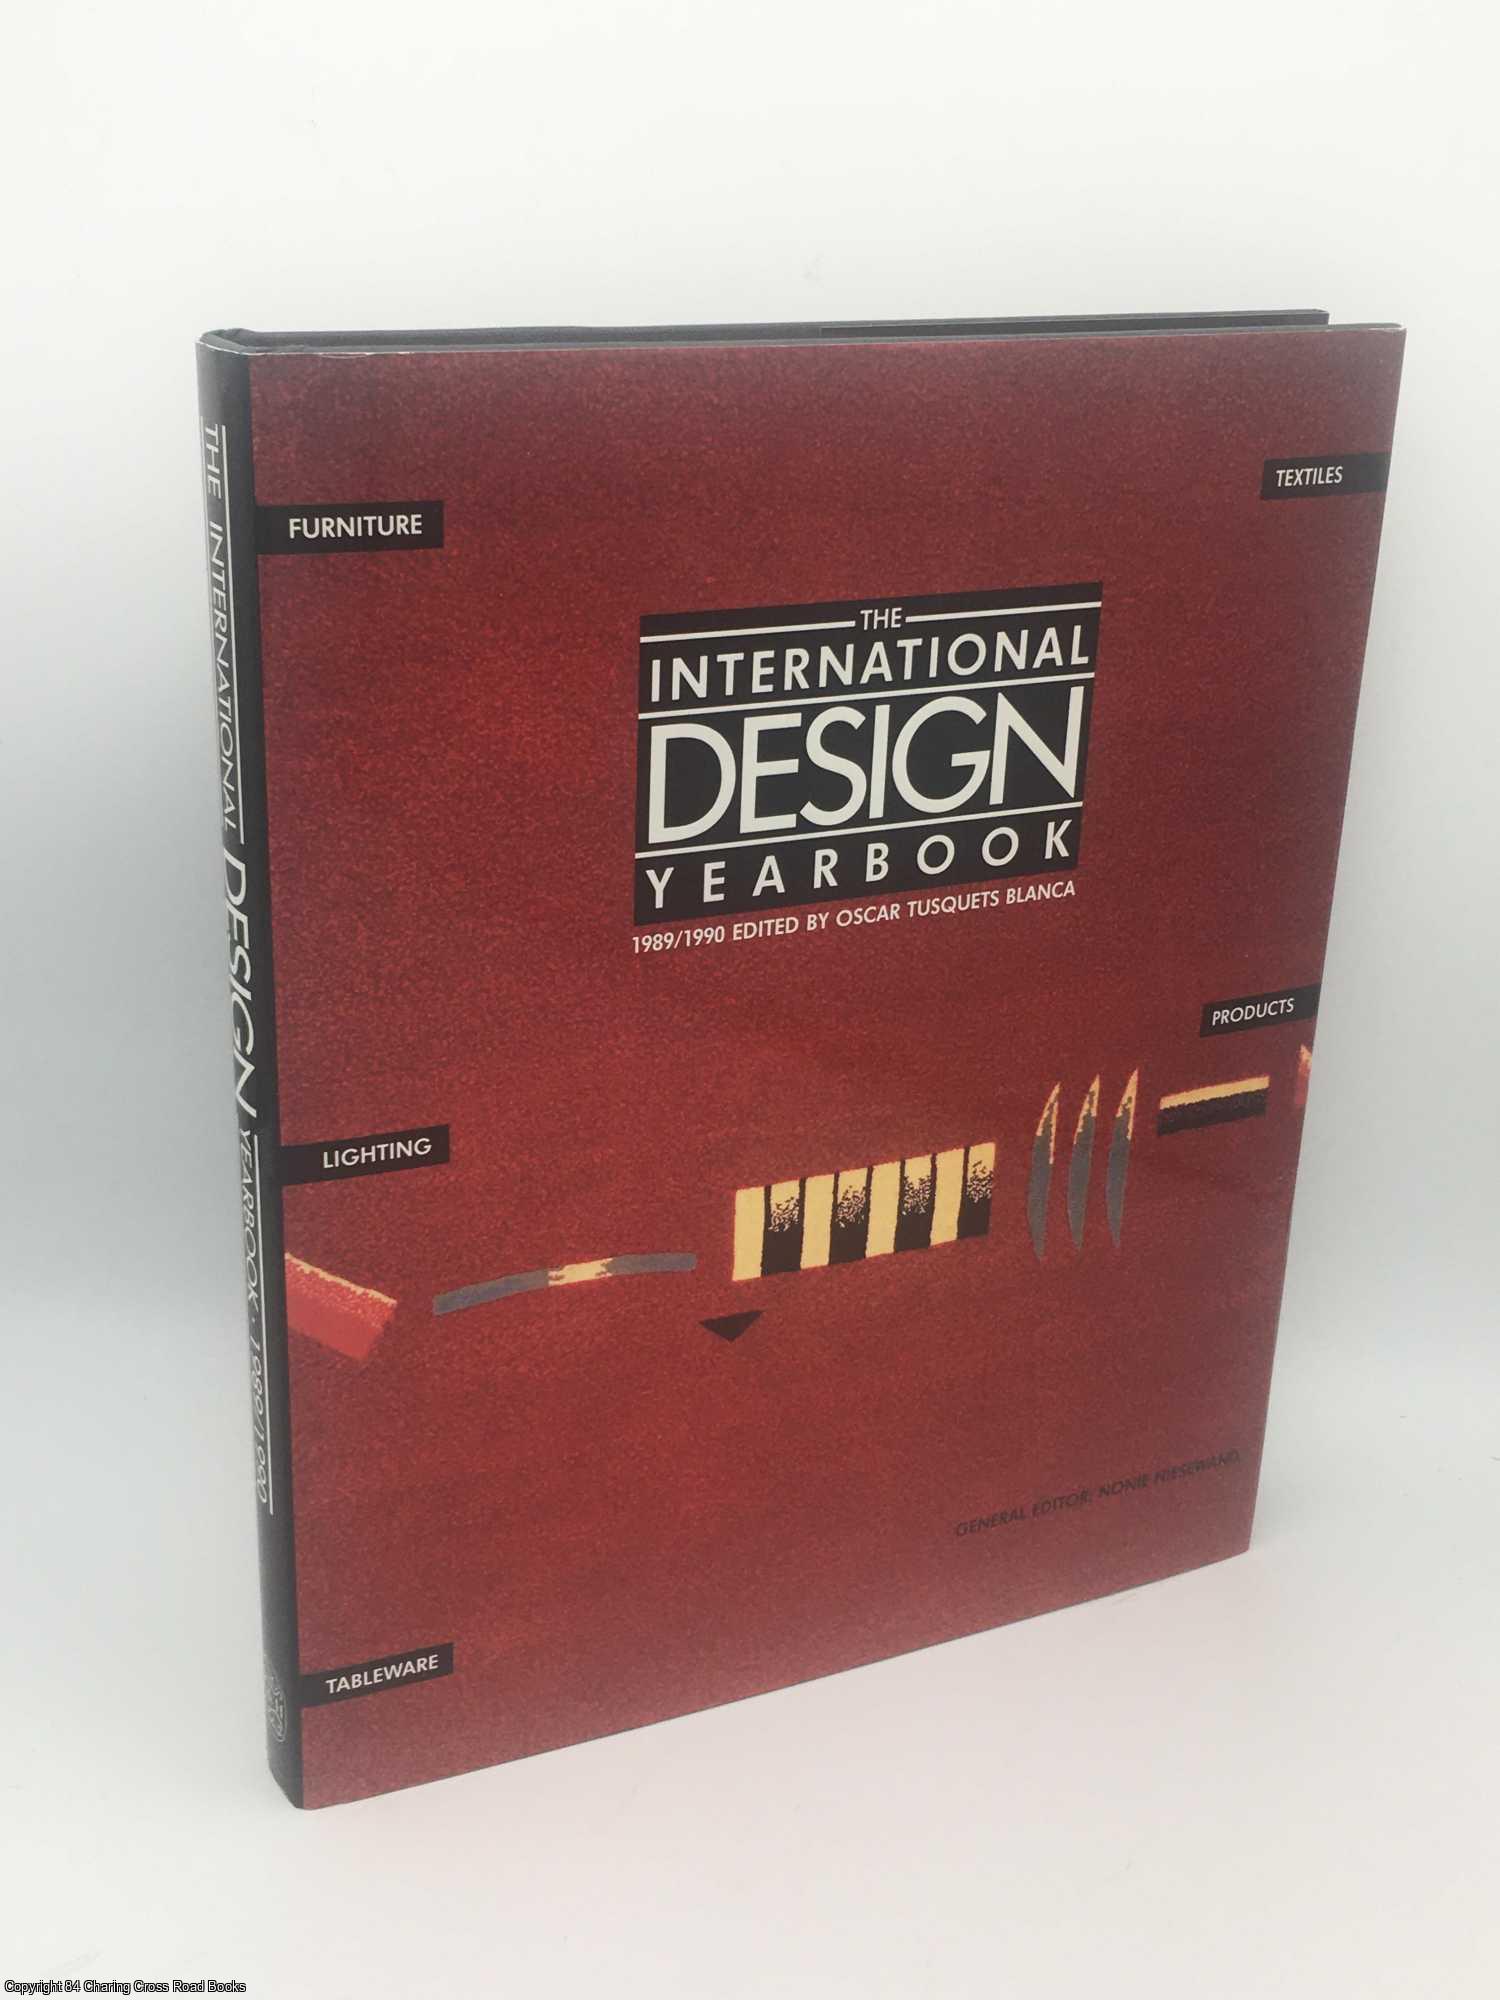 Ambasz, Emilio - The International Design Yearbook, 1986/1987